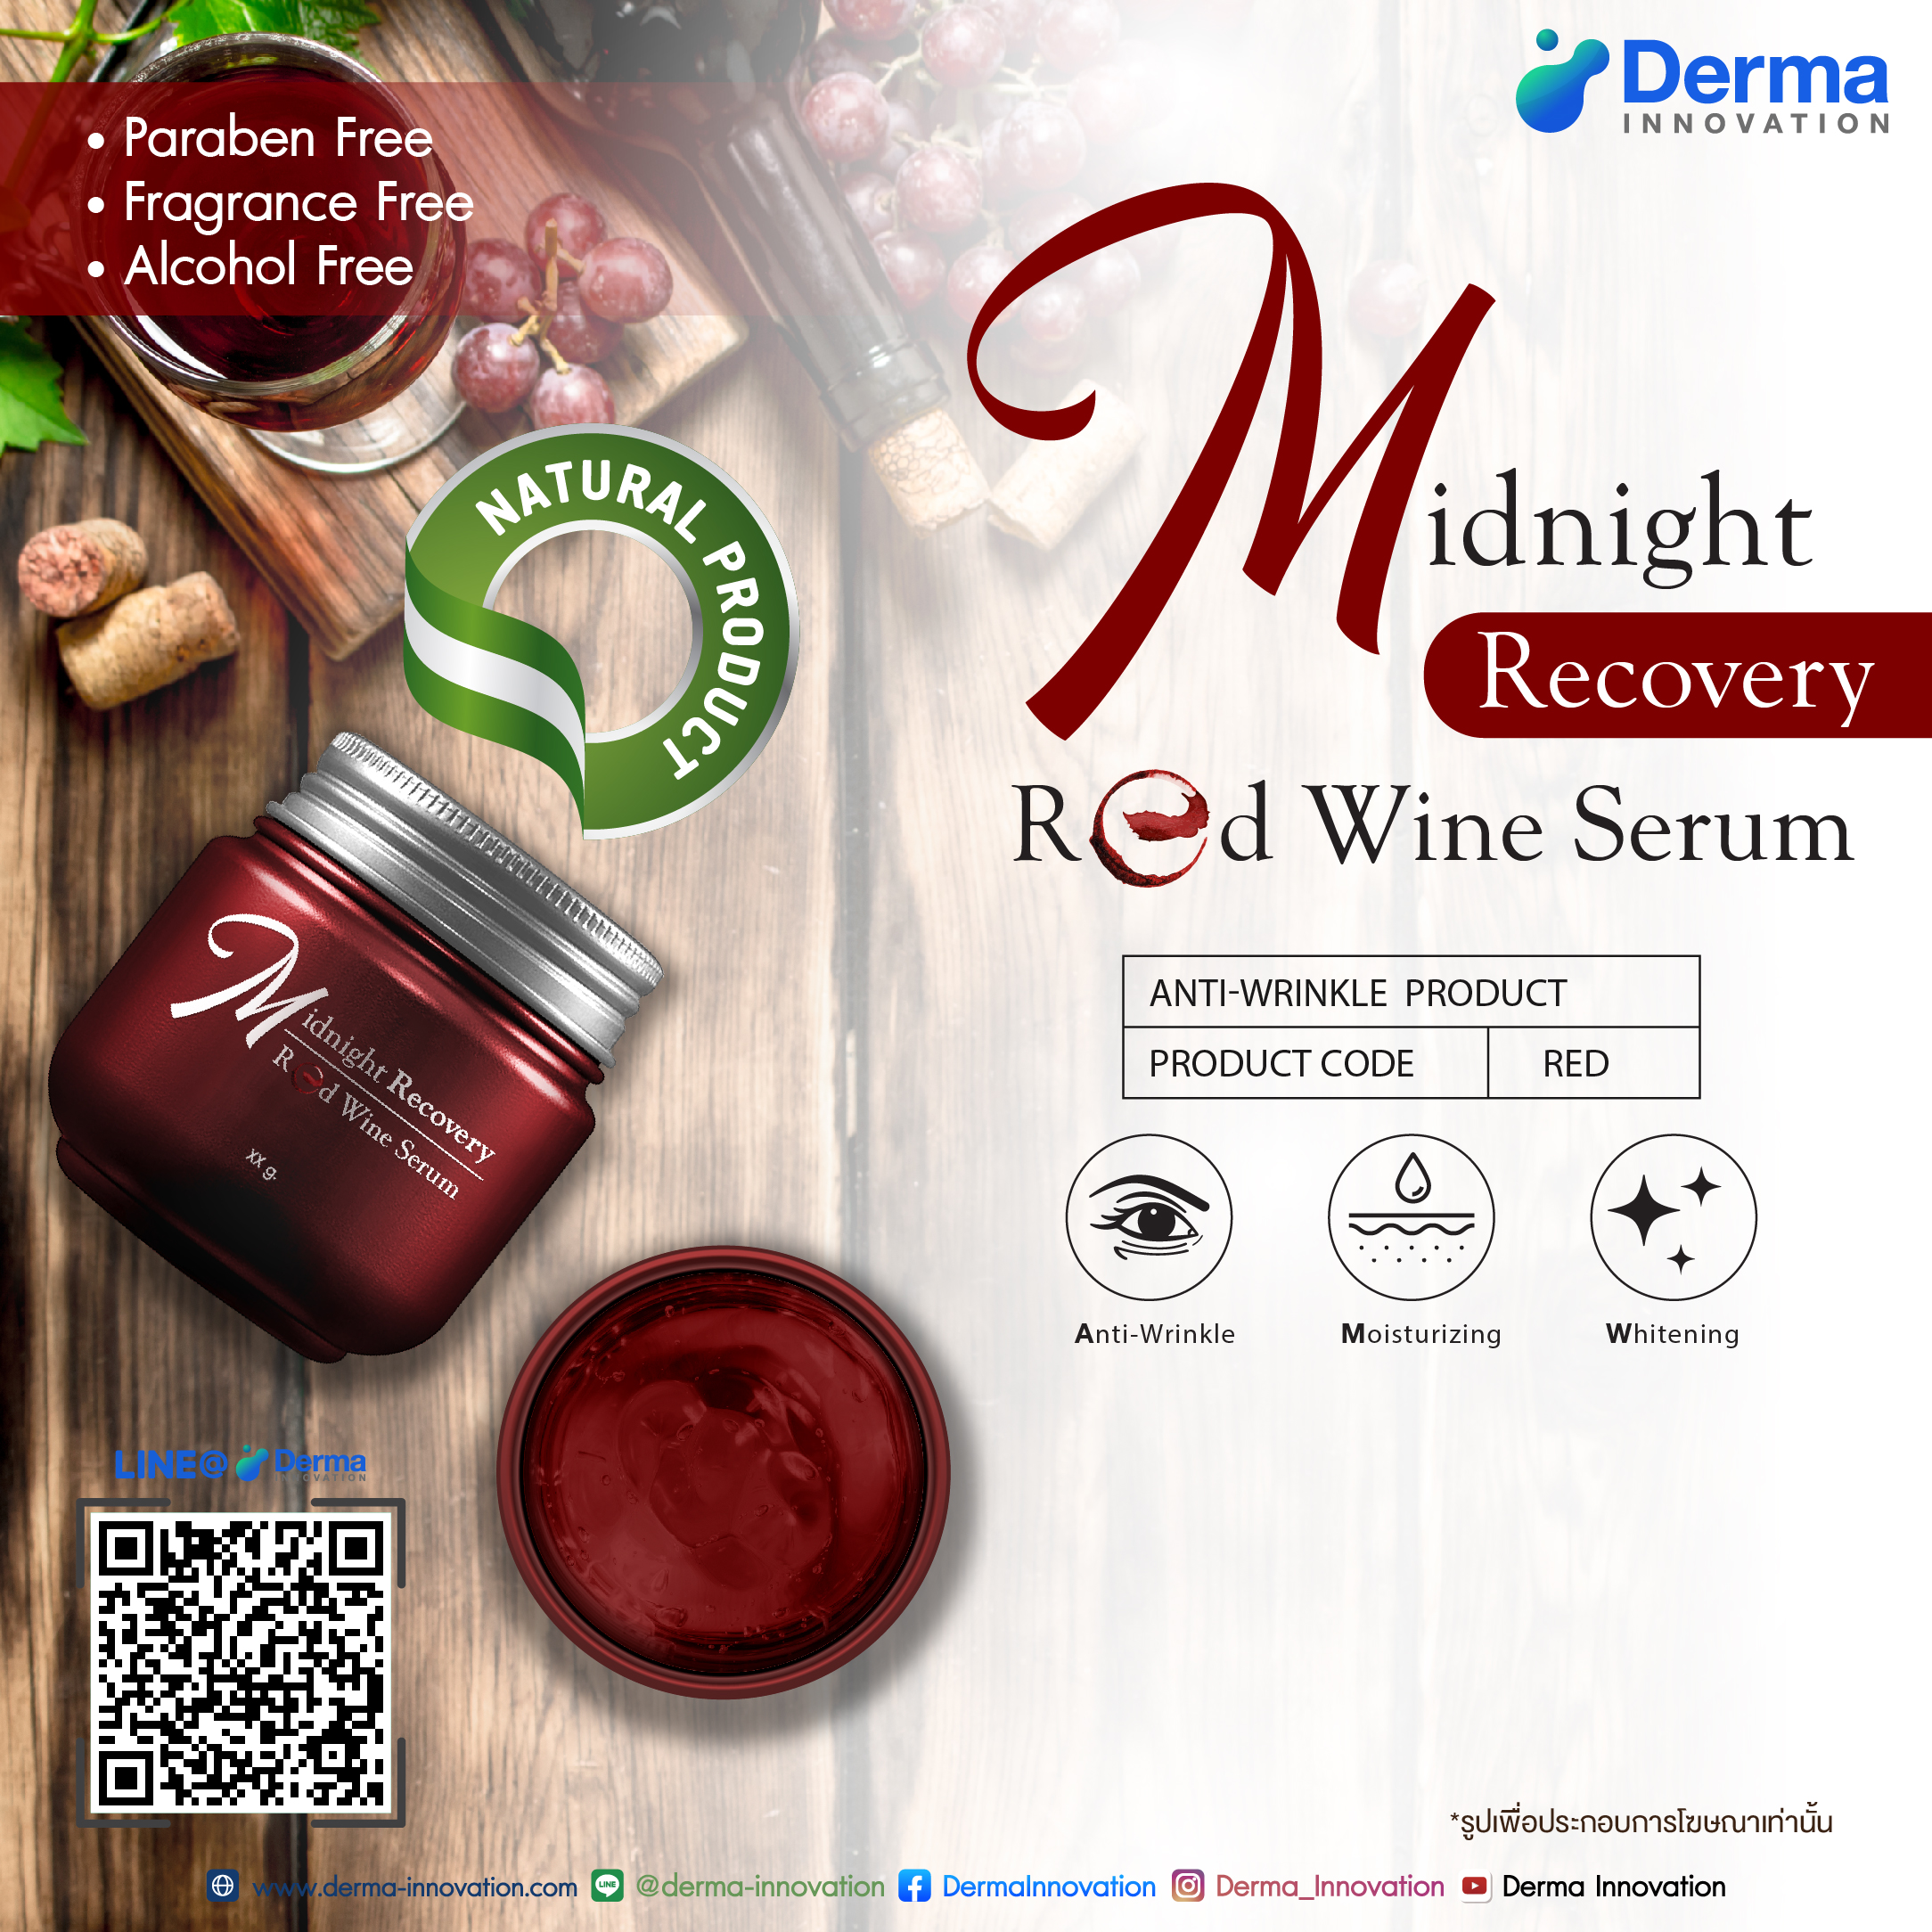 Midnight Recovery Red Wine Serum